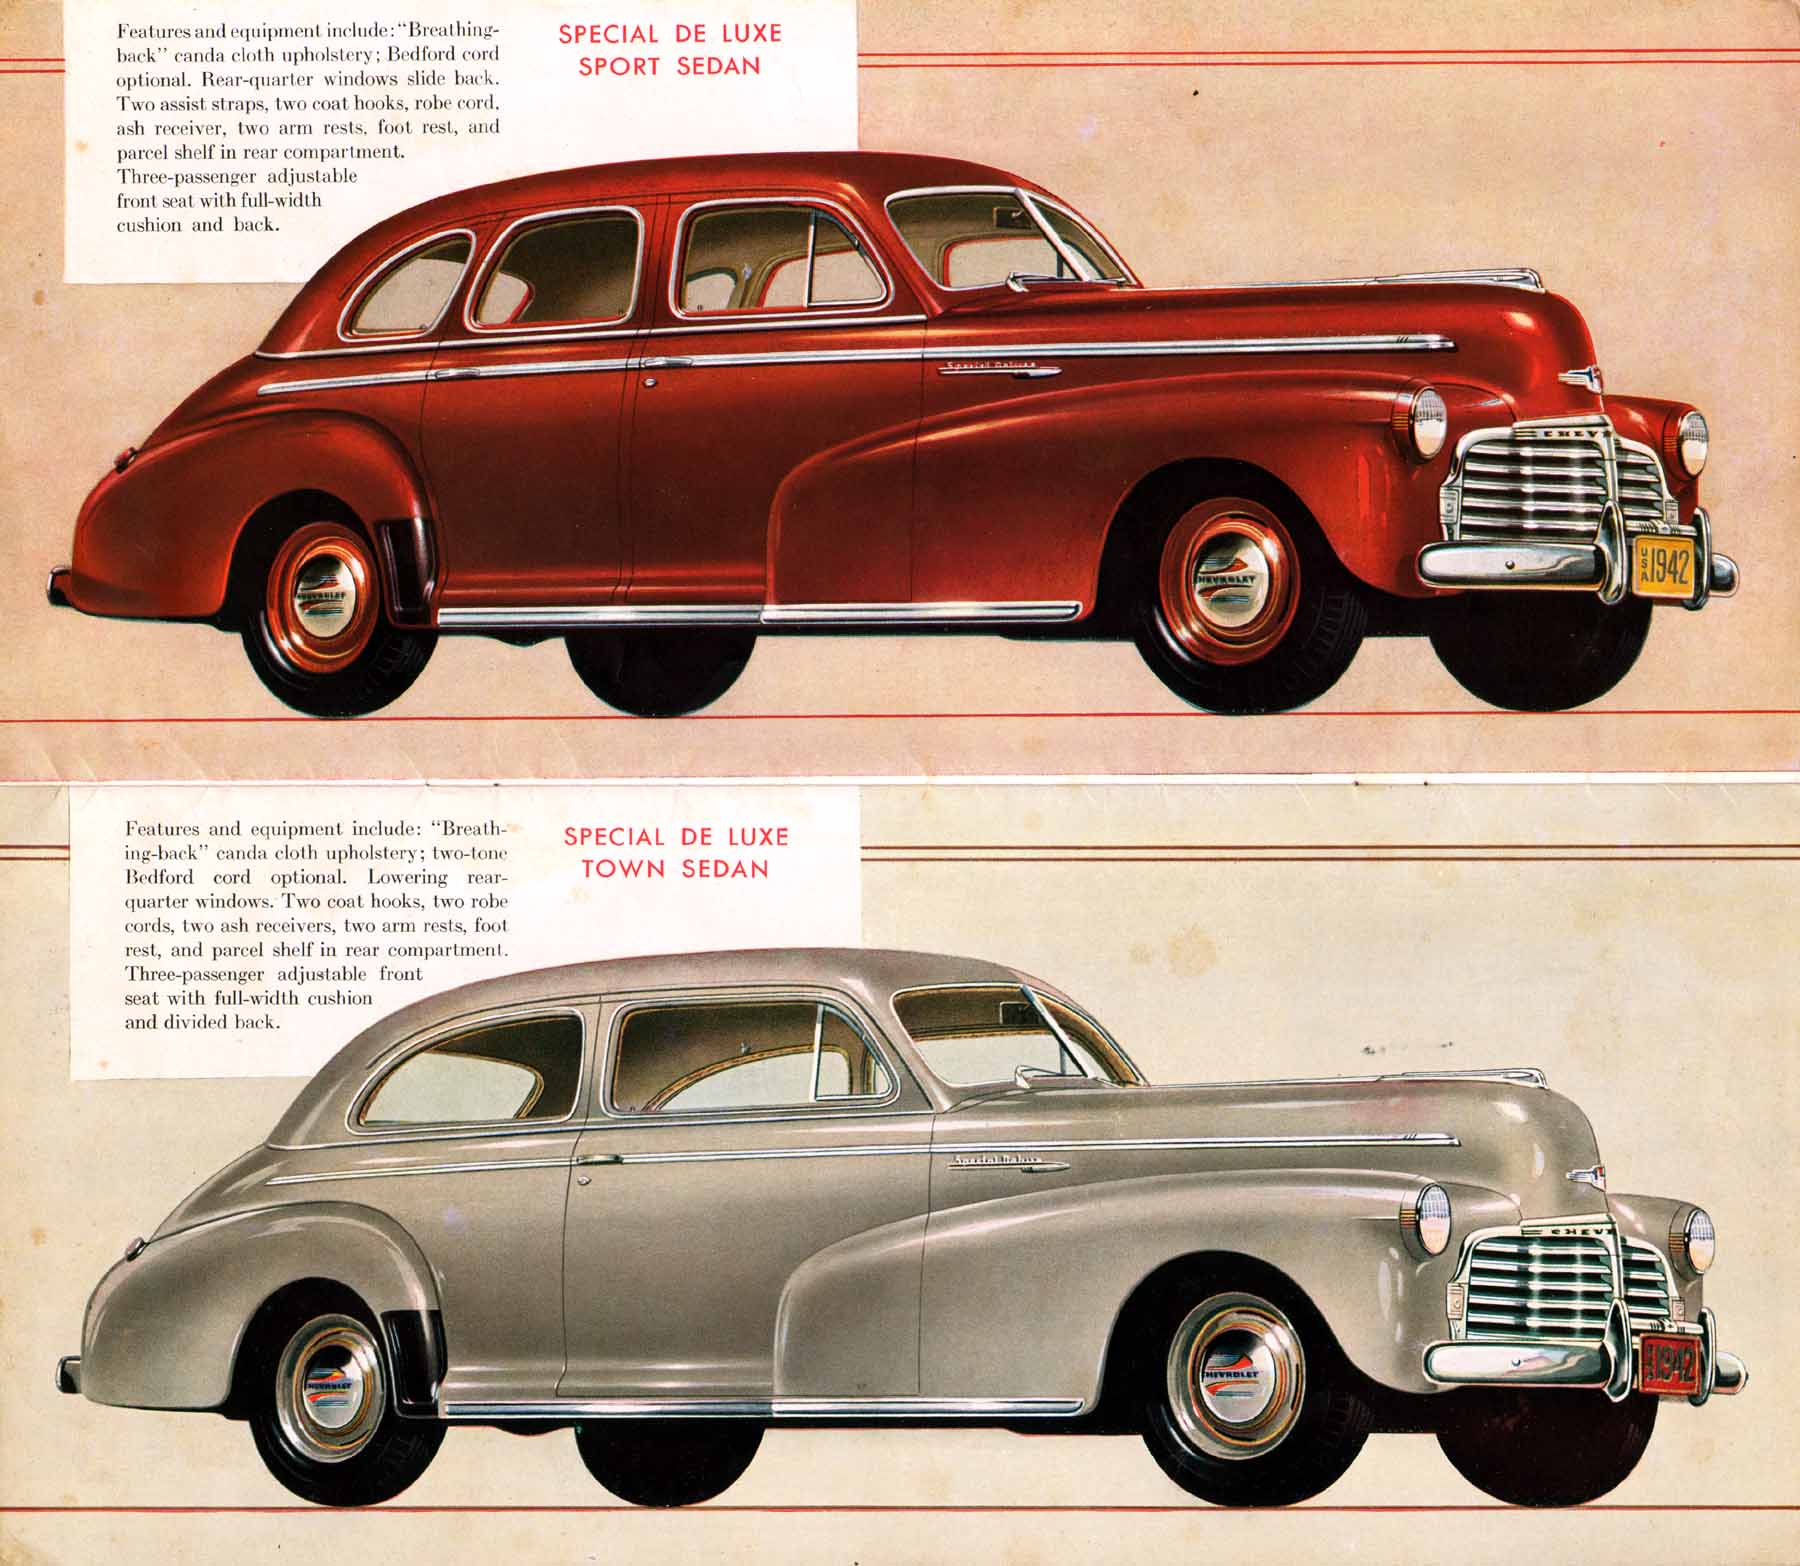 1942_Chevrolet-04-05